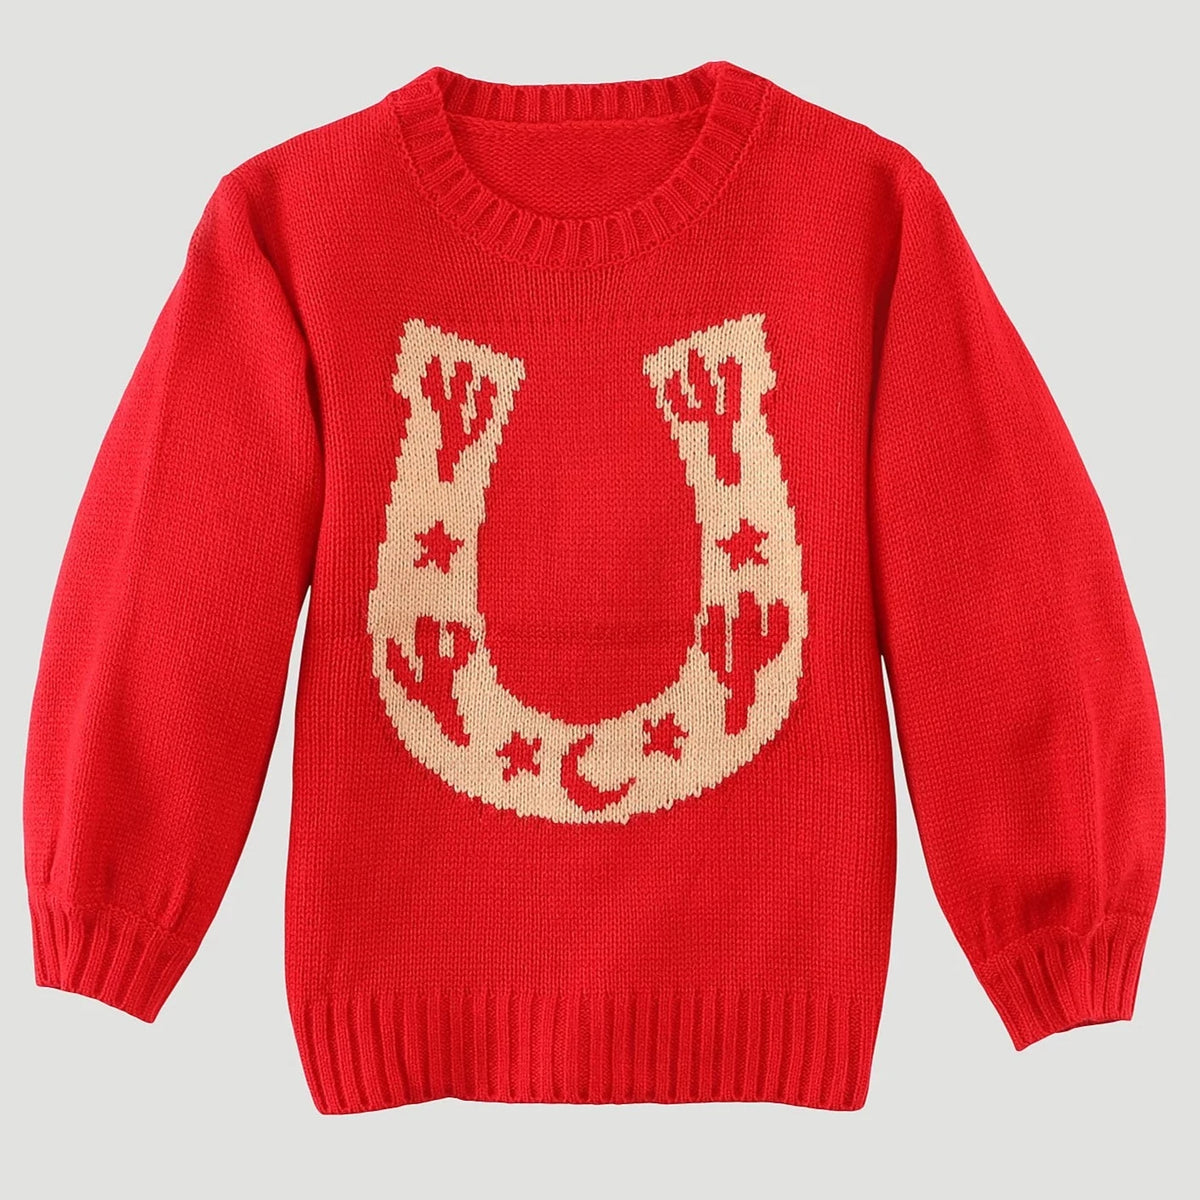 Wrangler Girl's Horseshoe Cacti Sweater in Red